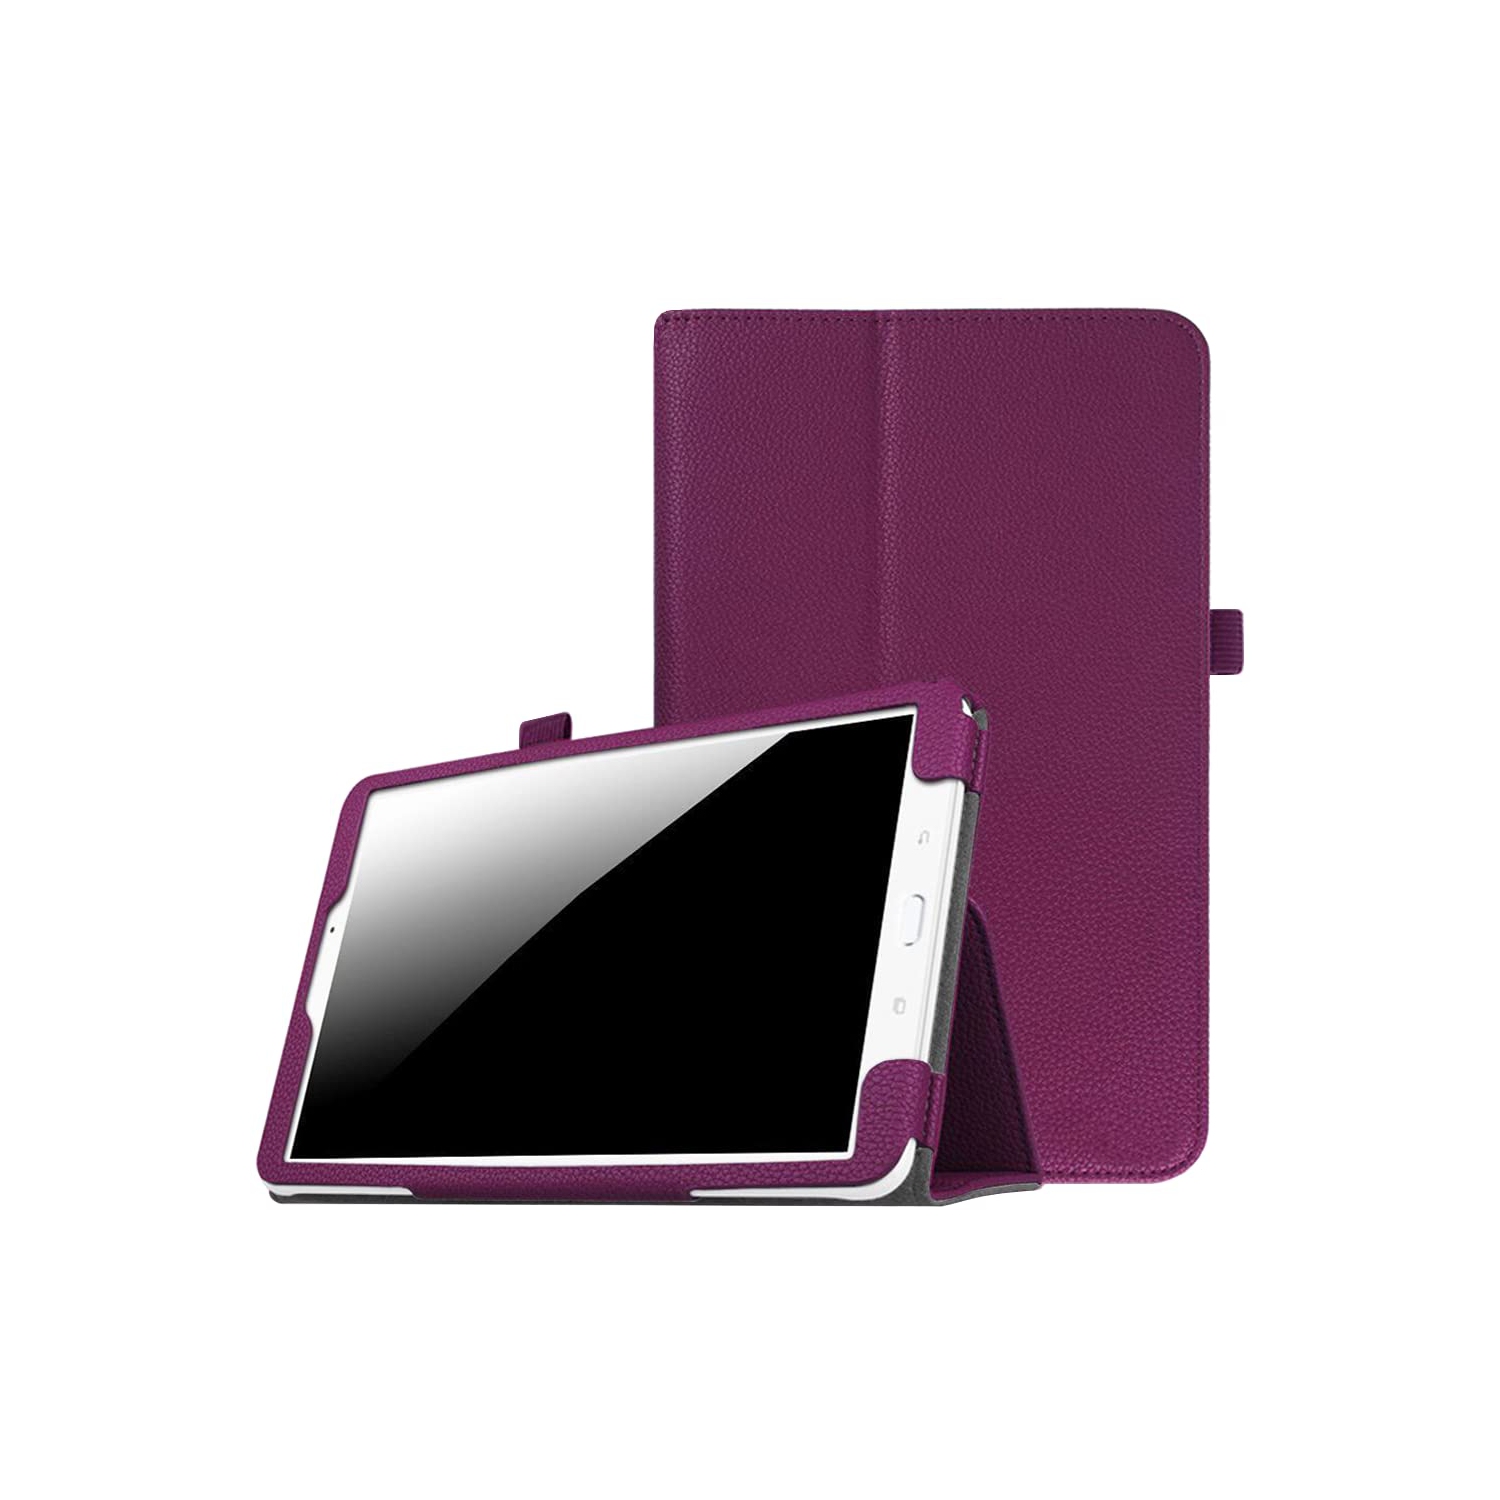 KYVIAUM Slim Case for Samsung Galaxy Tab E 9.6'', Lightweight Stand Cover for Samsung Galaxy Tab E 9.6 Inch Tablet 2015 Rele